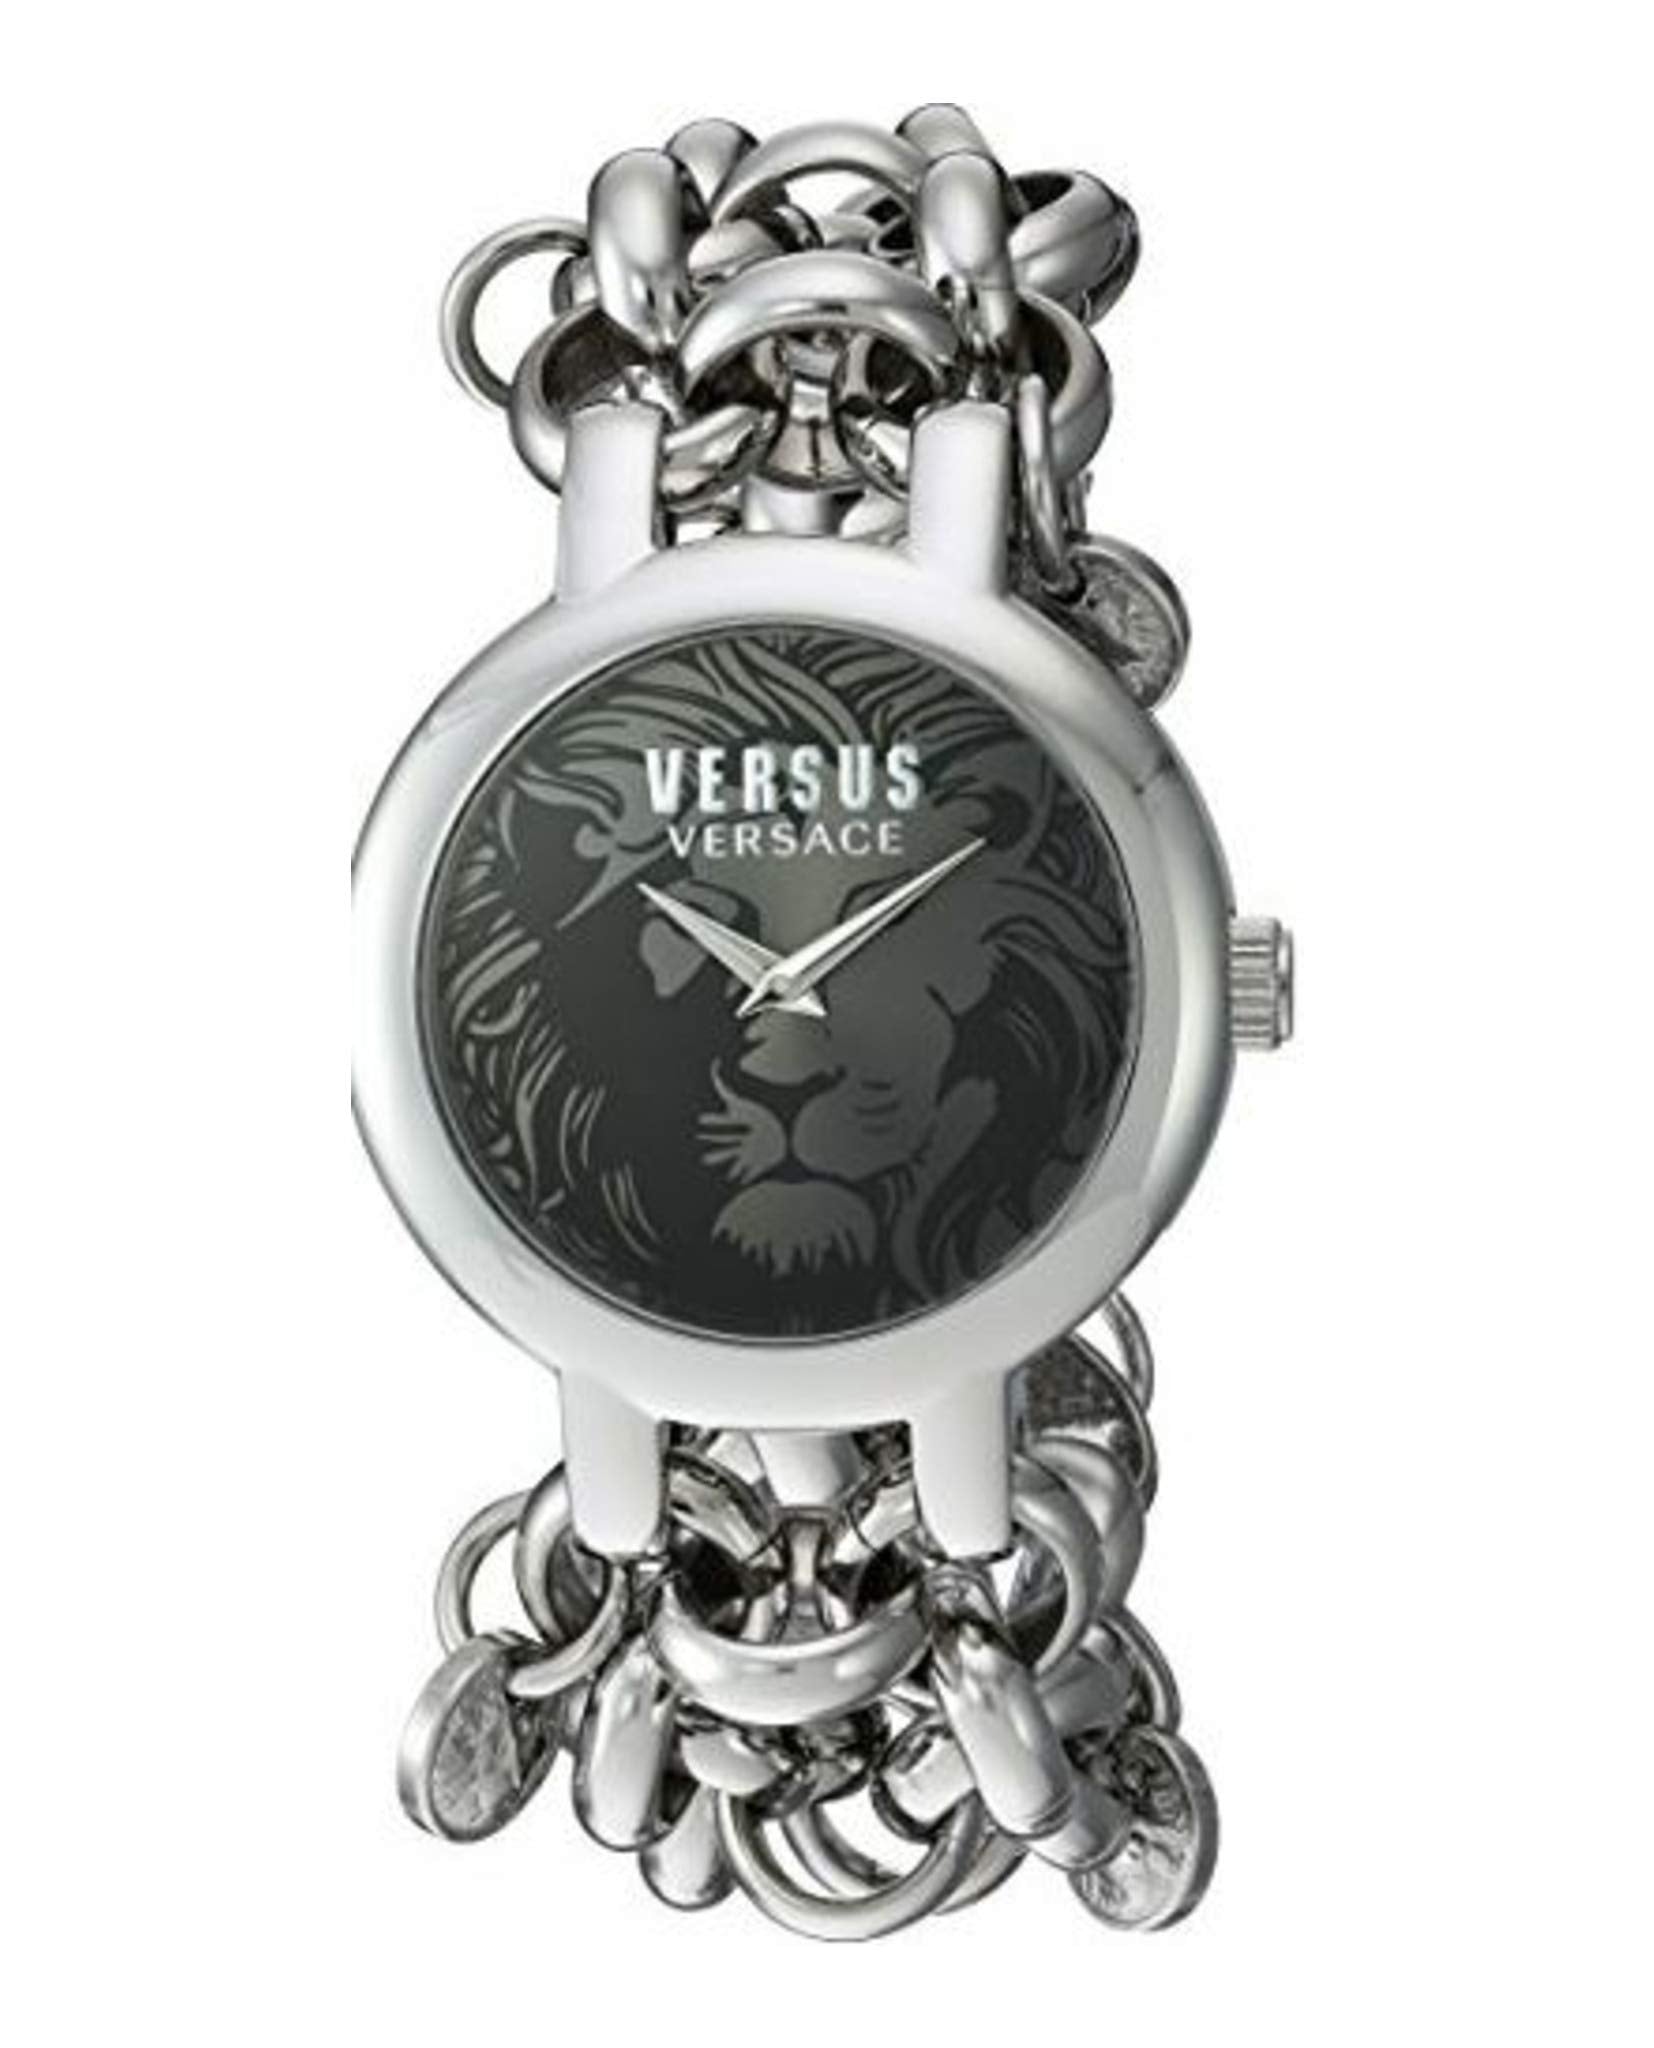 Versus Versace Agadir Watch